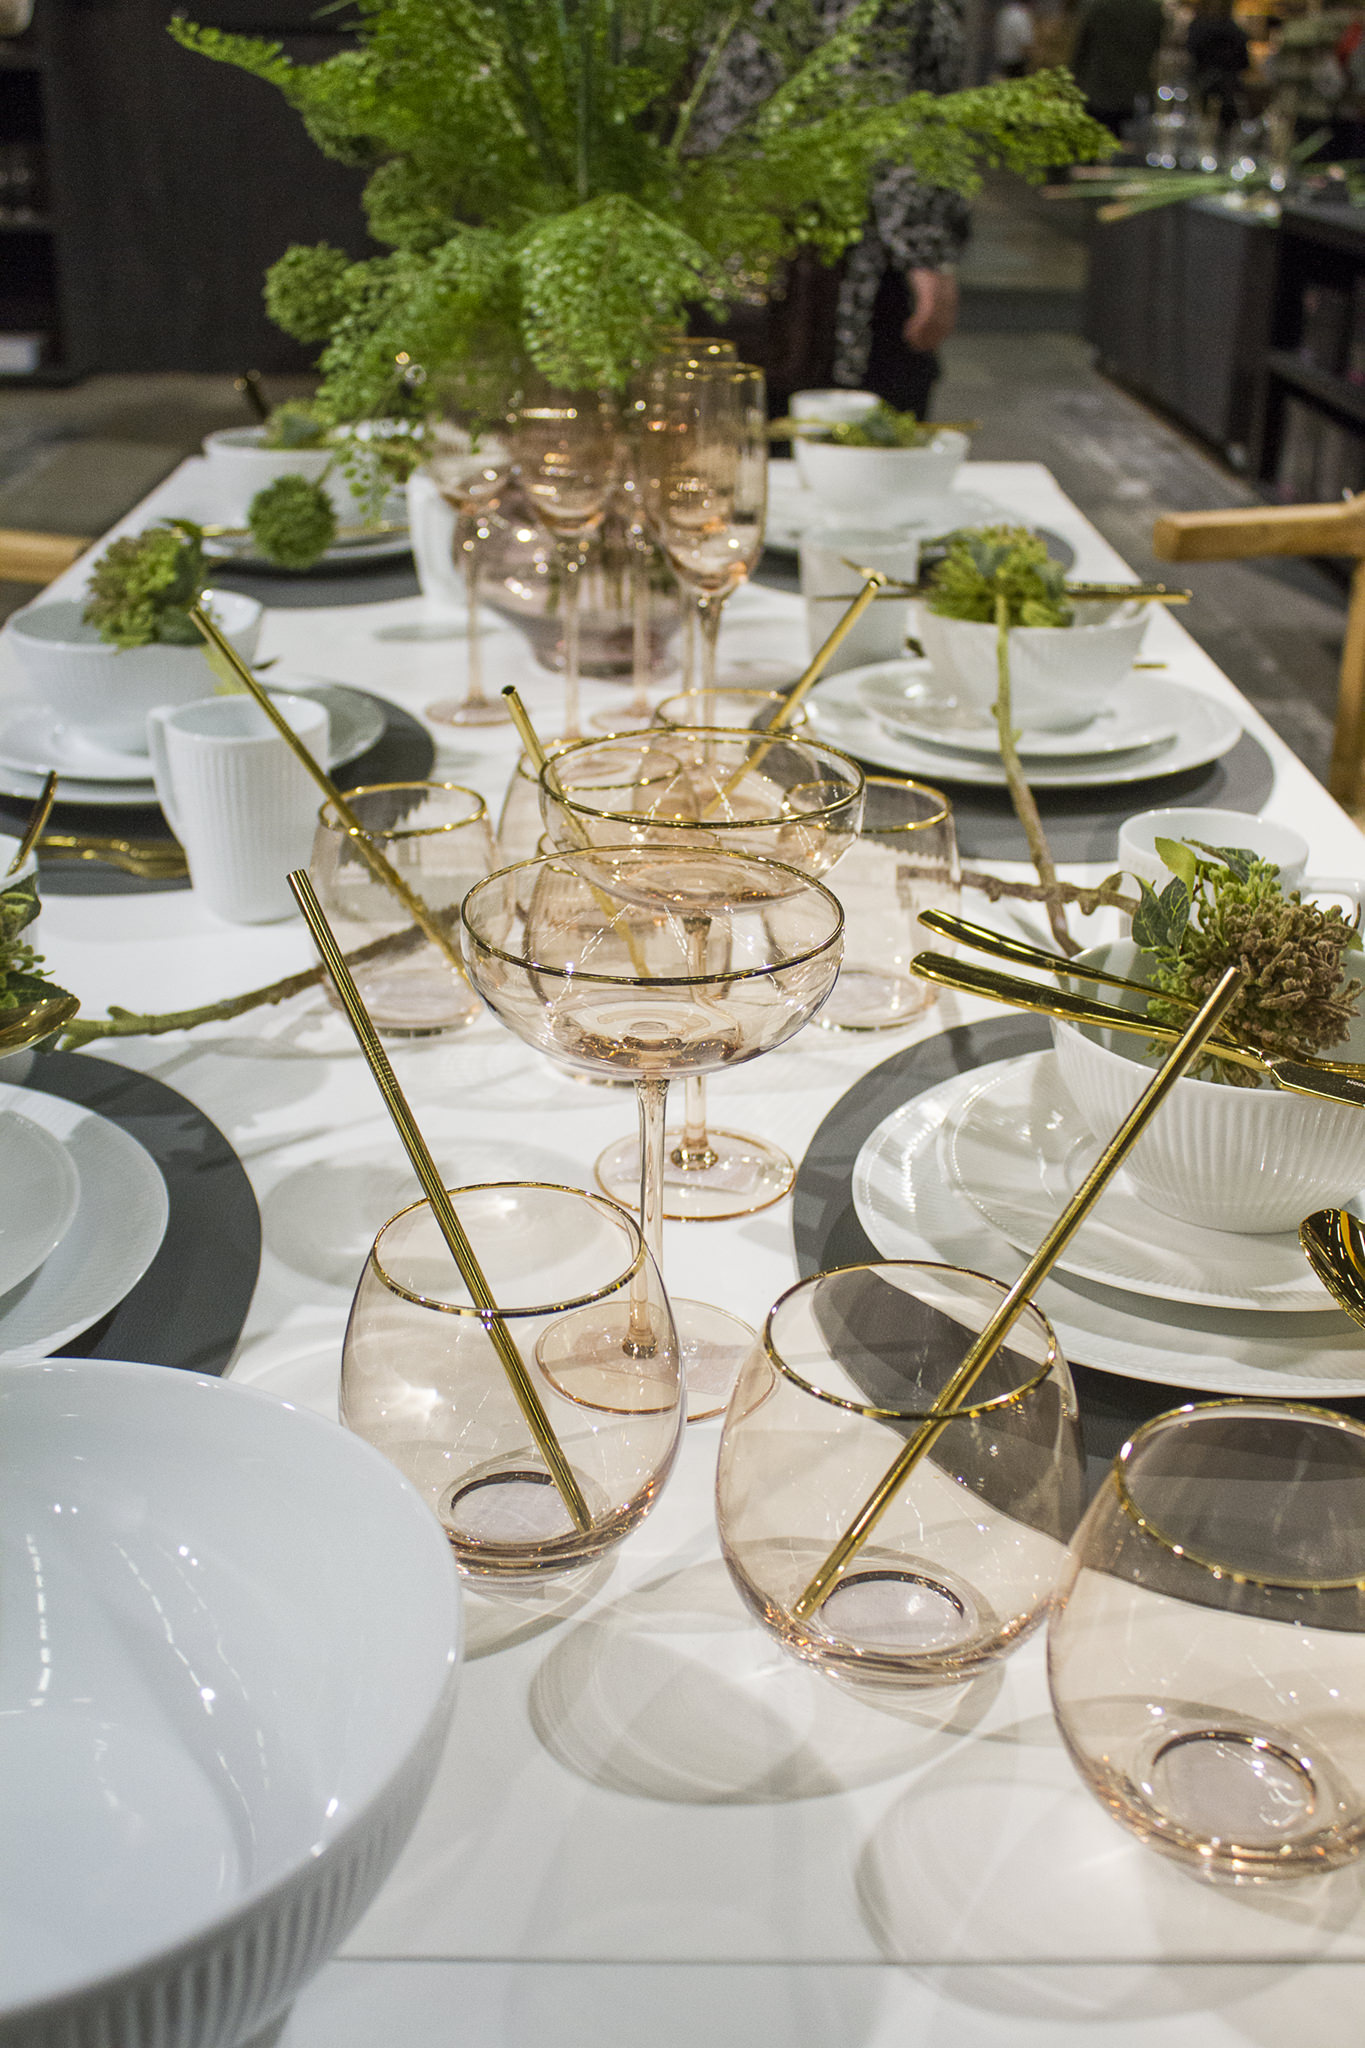 Formex interior scandinavian design fair stockholm sweden table glasses metal straw plates